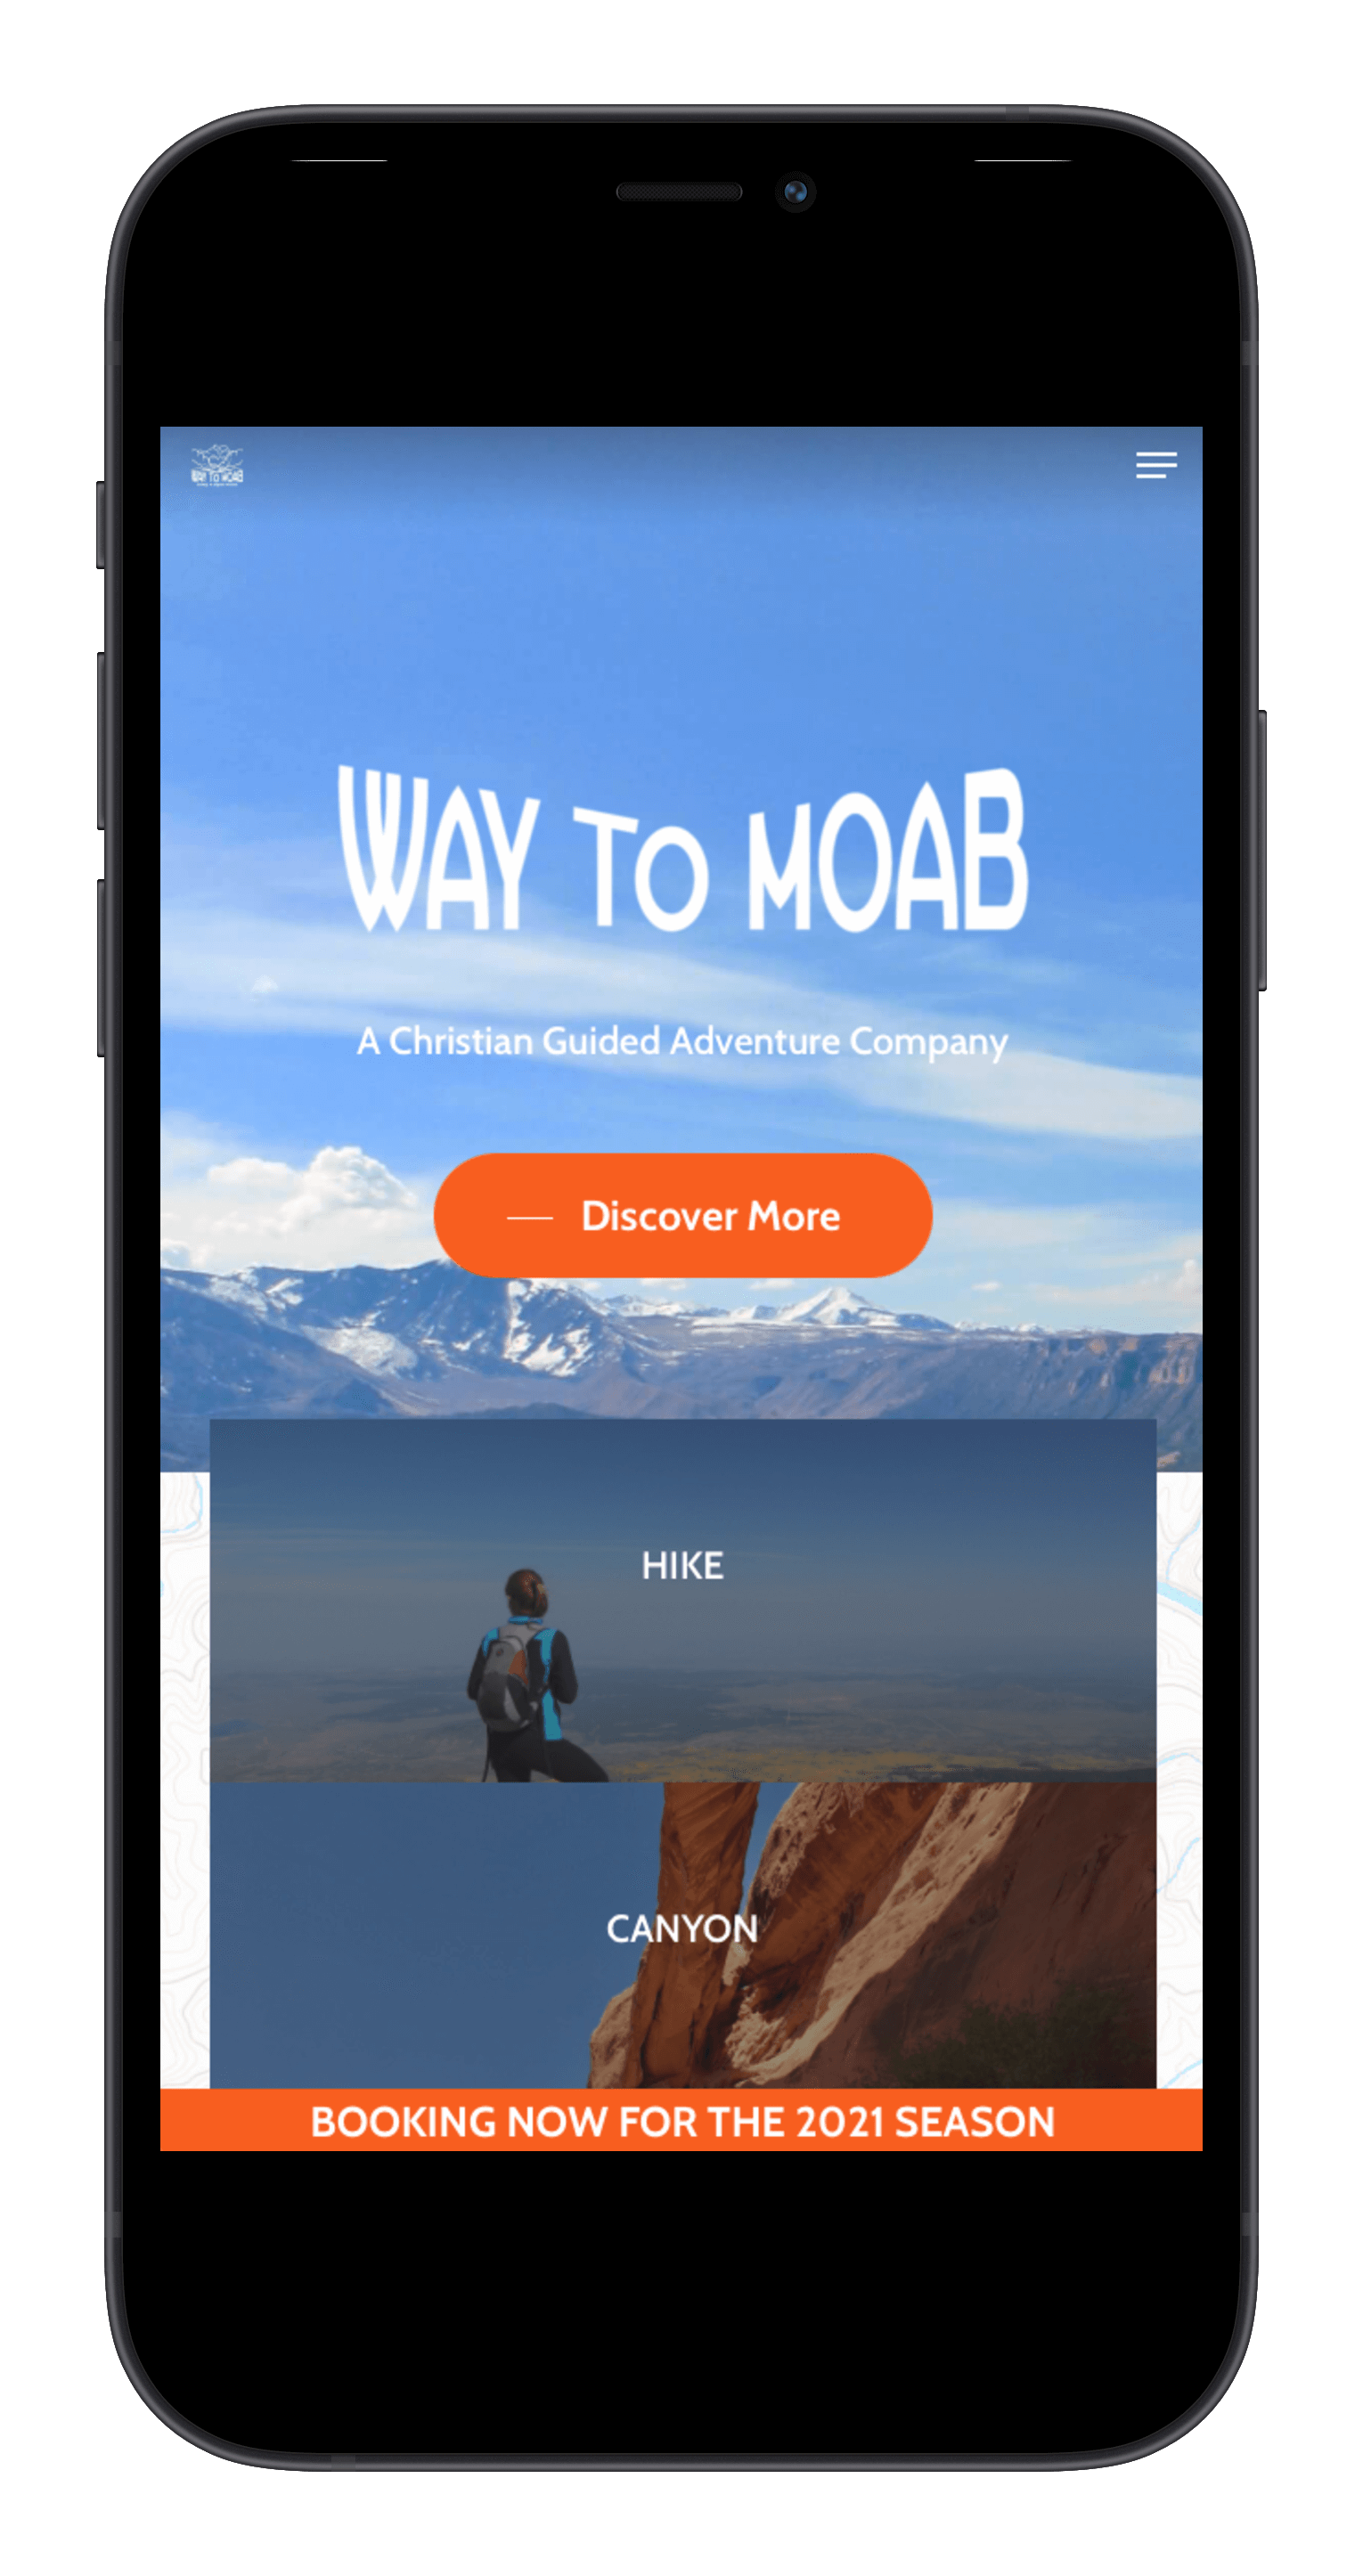 Way to moab mobile mockup landing webpage - wordpress optimization at Big Red Jelly web design firm.